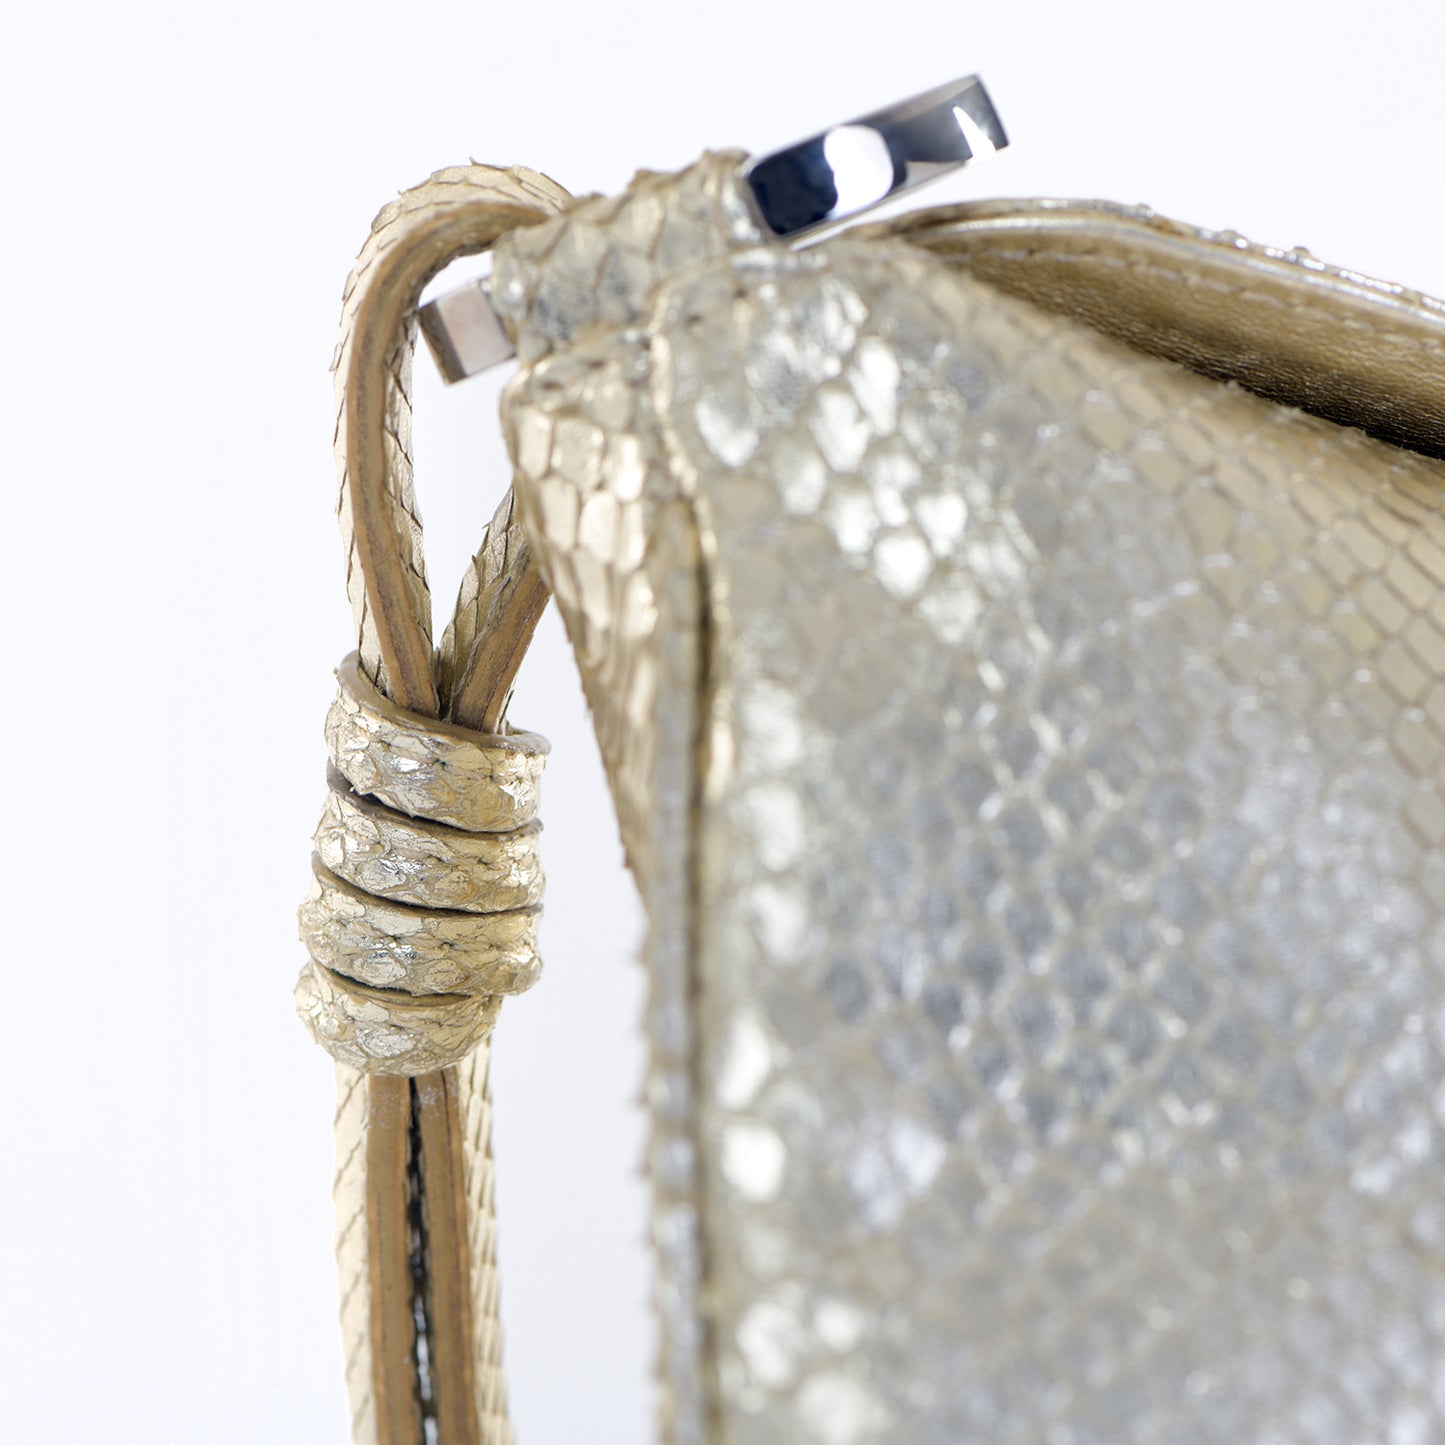 Metallic Silver Snakeskin Mini Bag